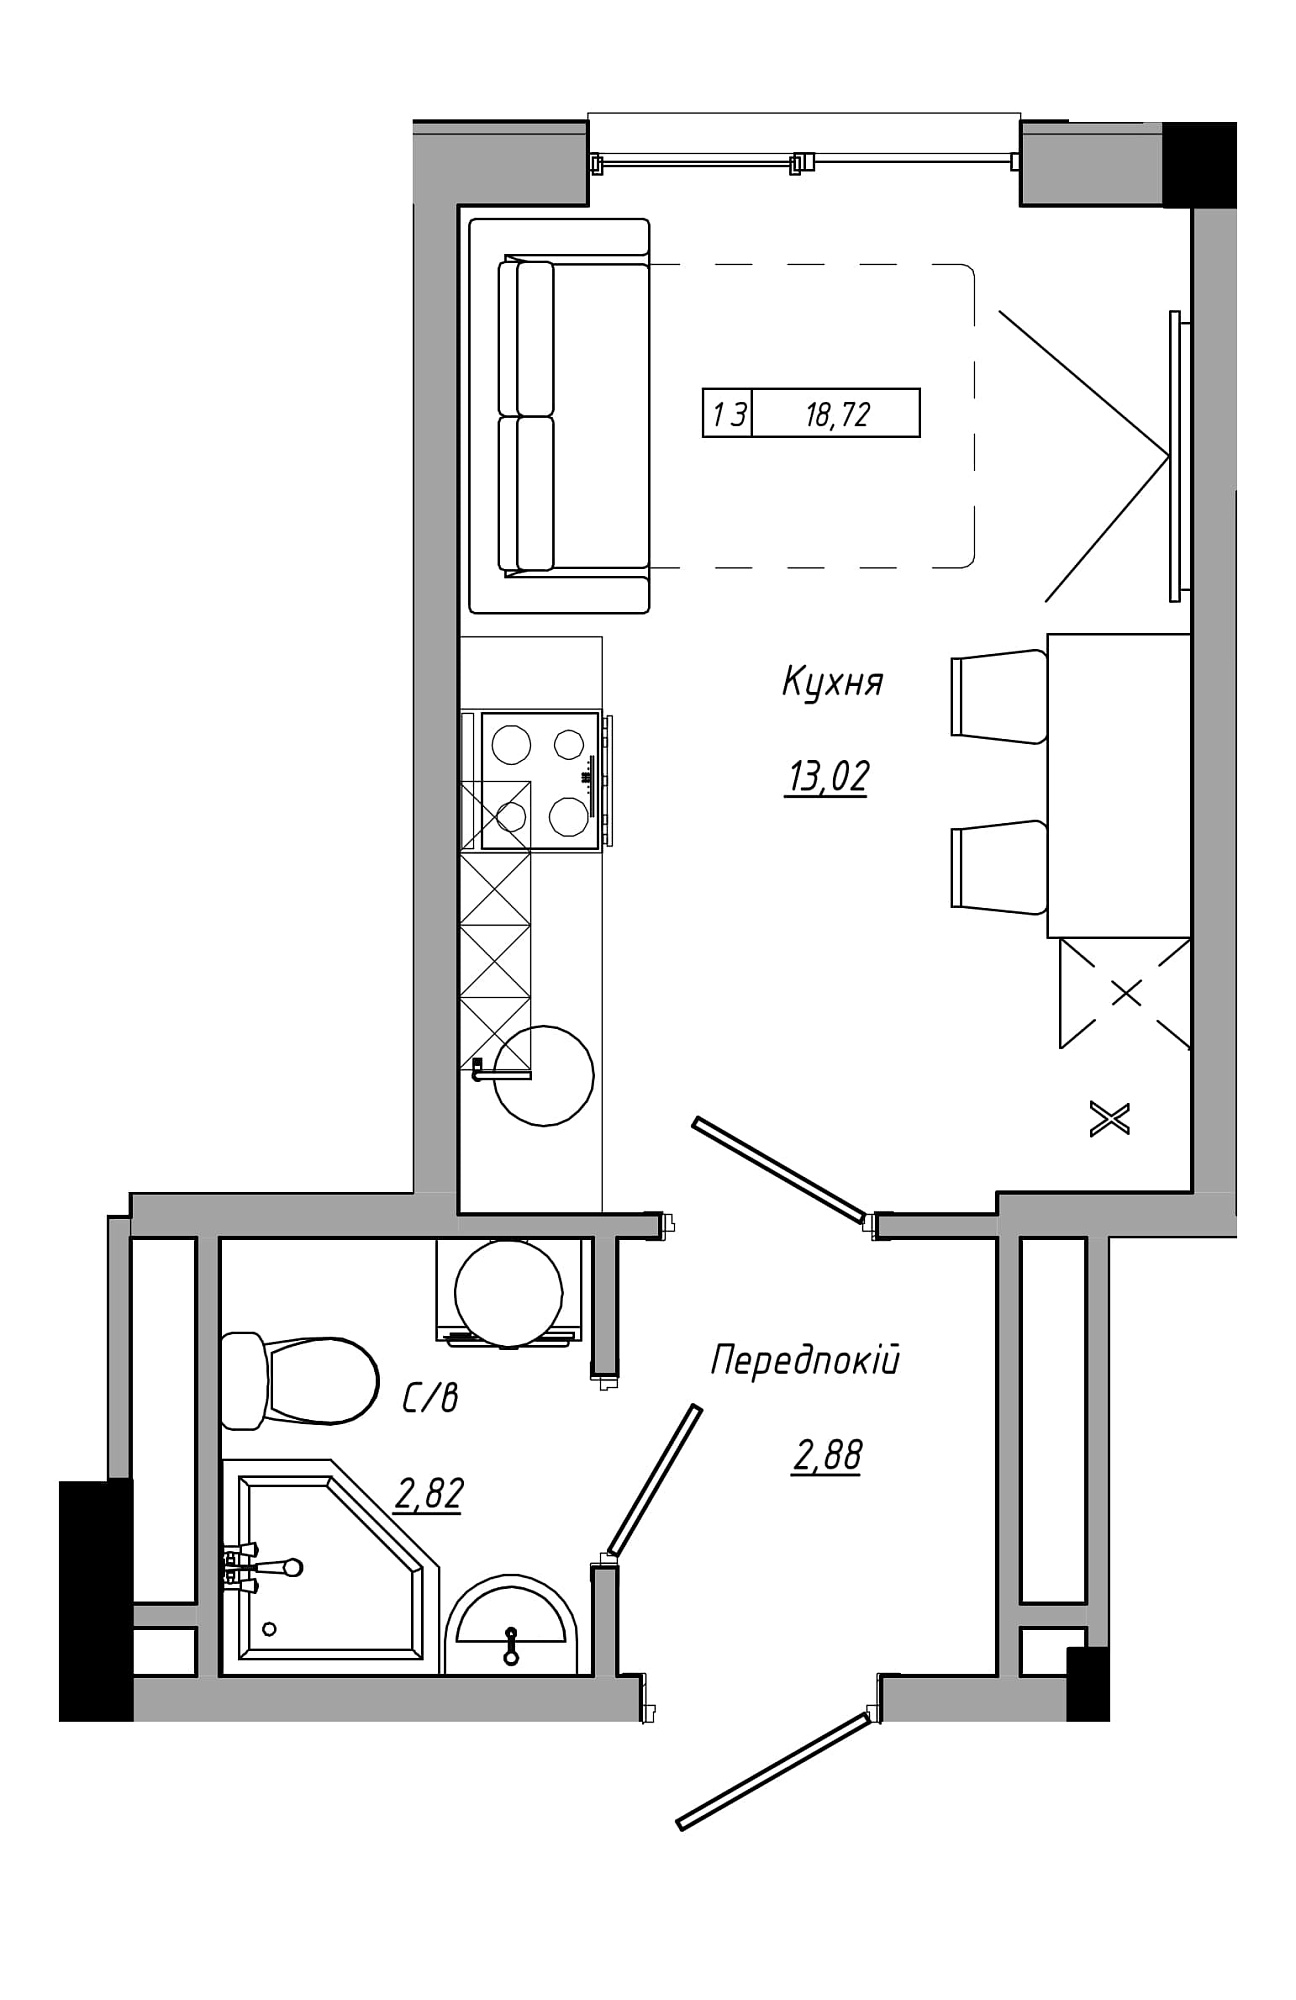 Planning Smart flats area 18.72m2, AB-21-10/00011.